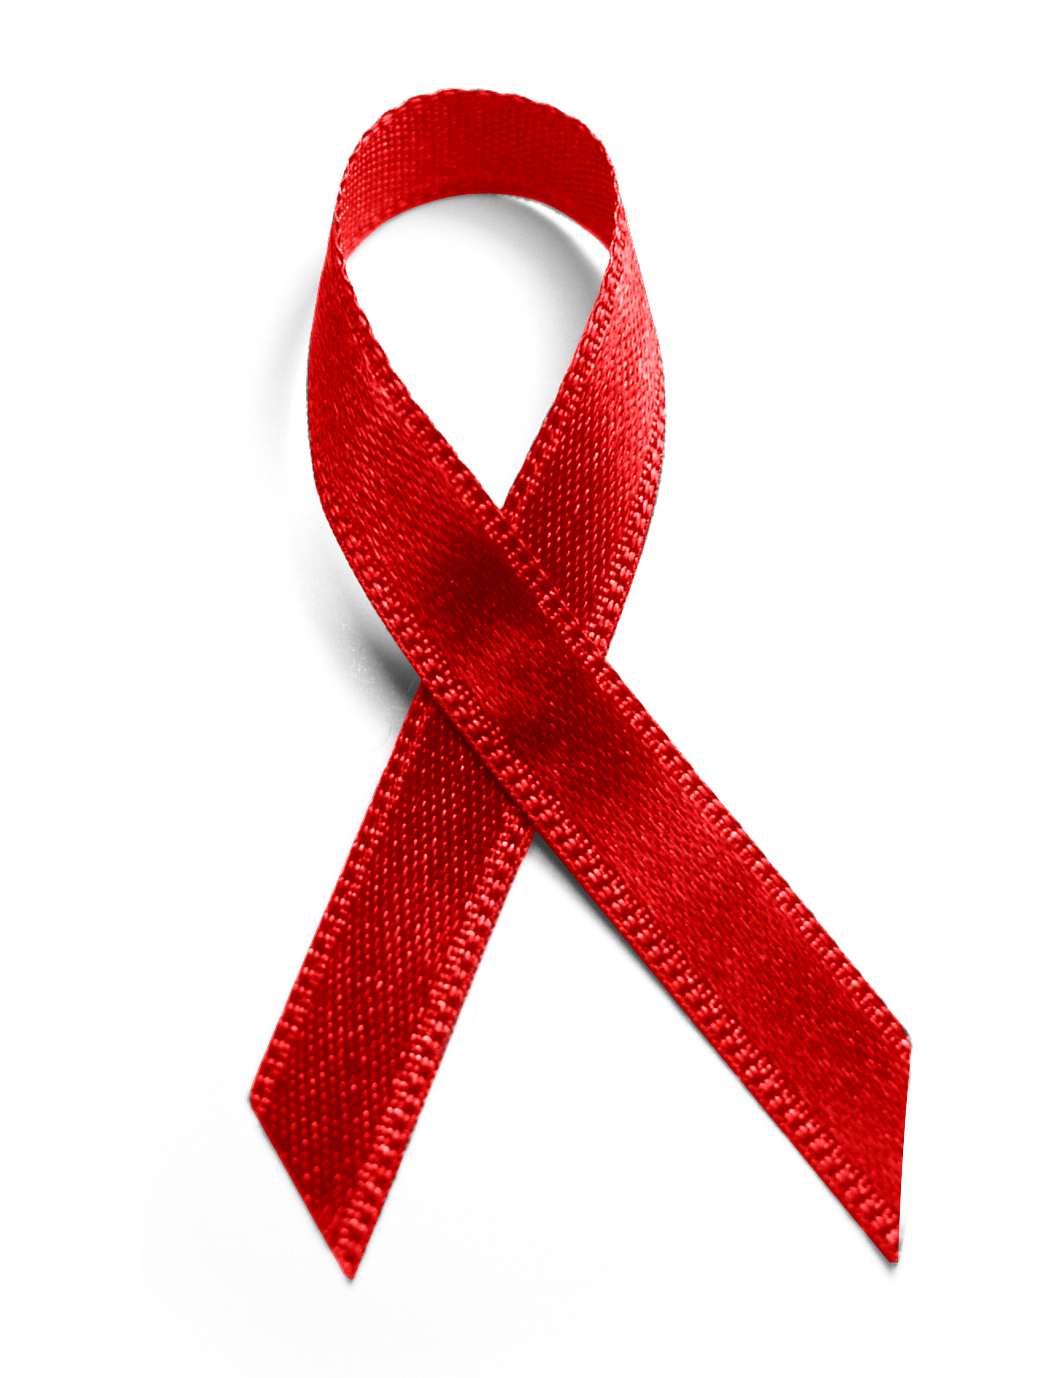 December : HIV Awareness Month